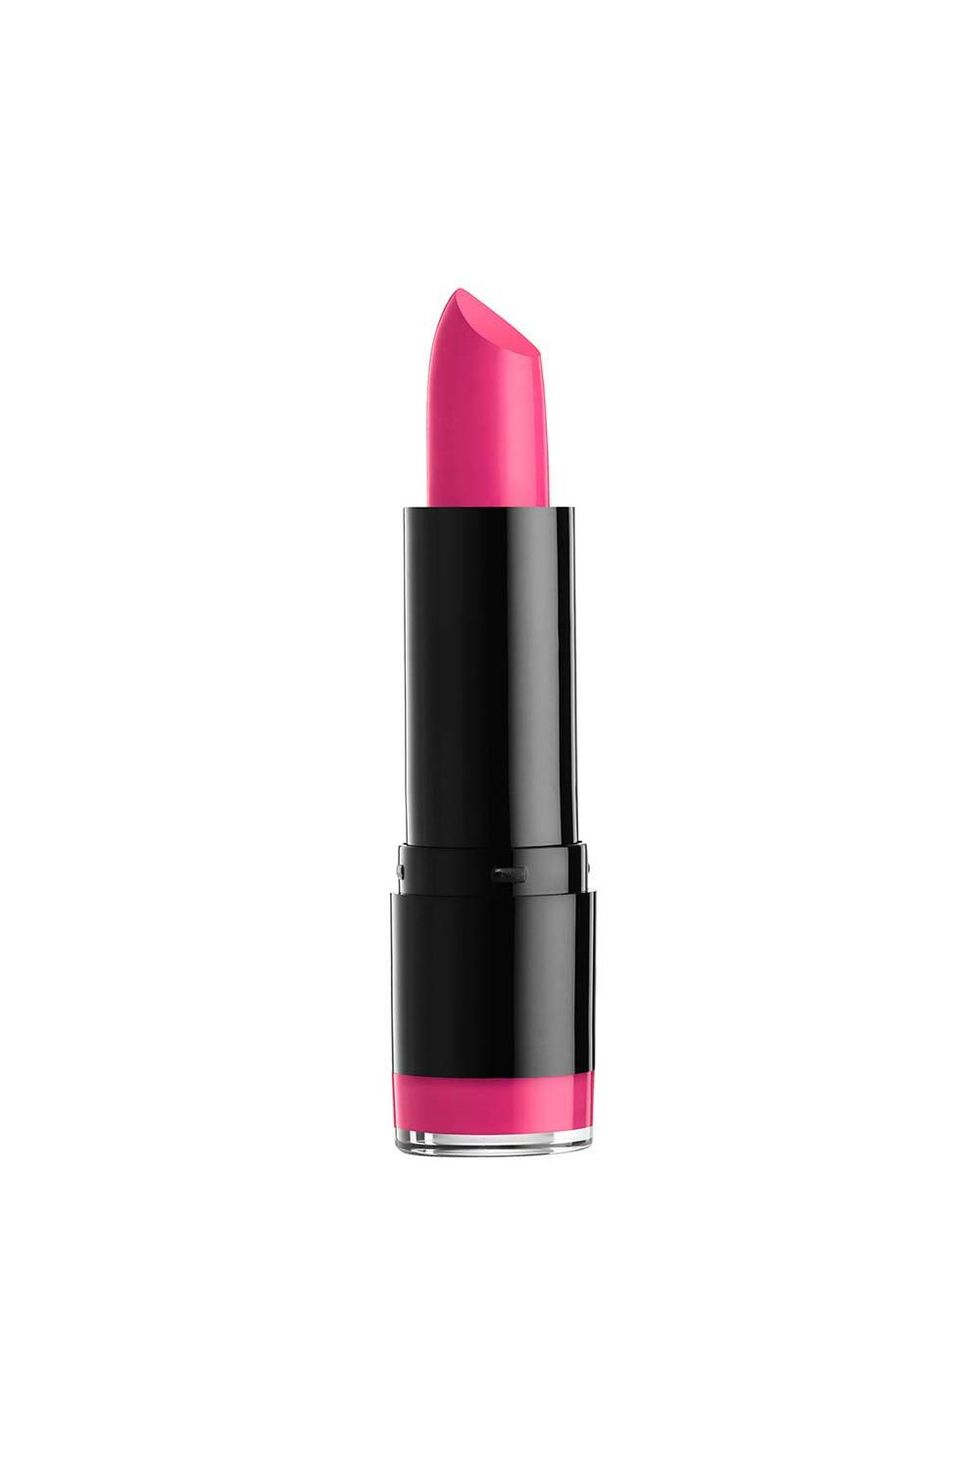 Extra Creamy Round Lipstick in Hot Pink